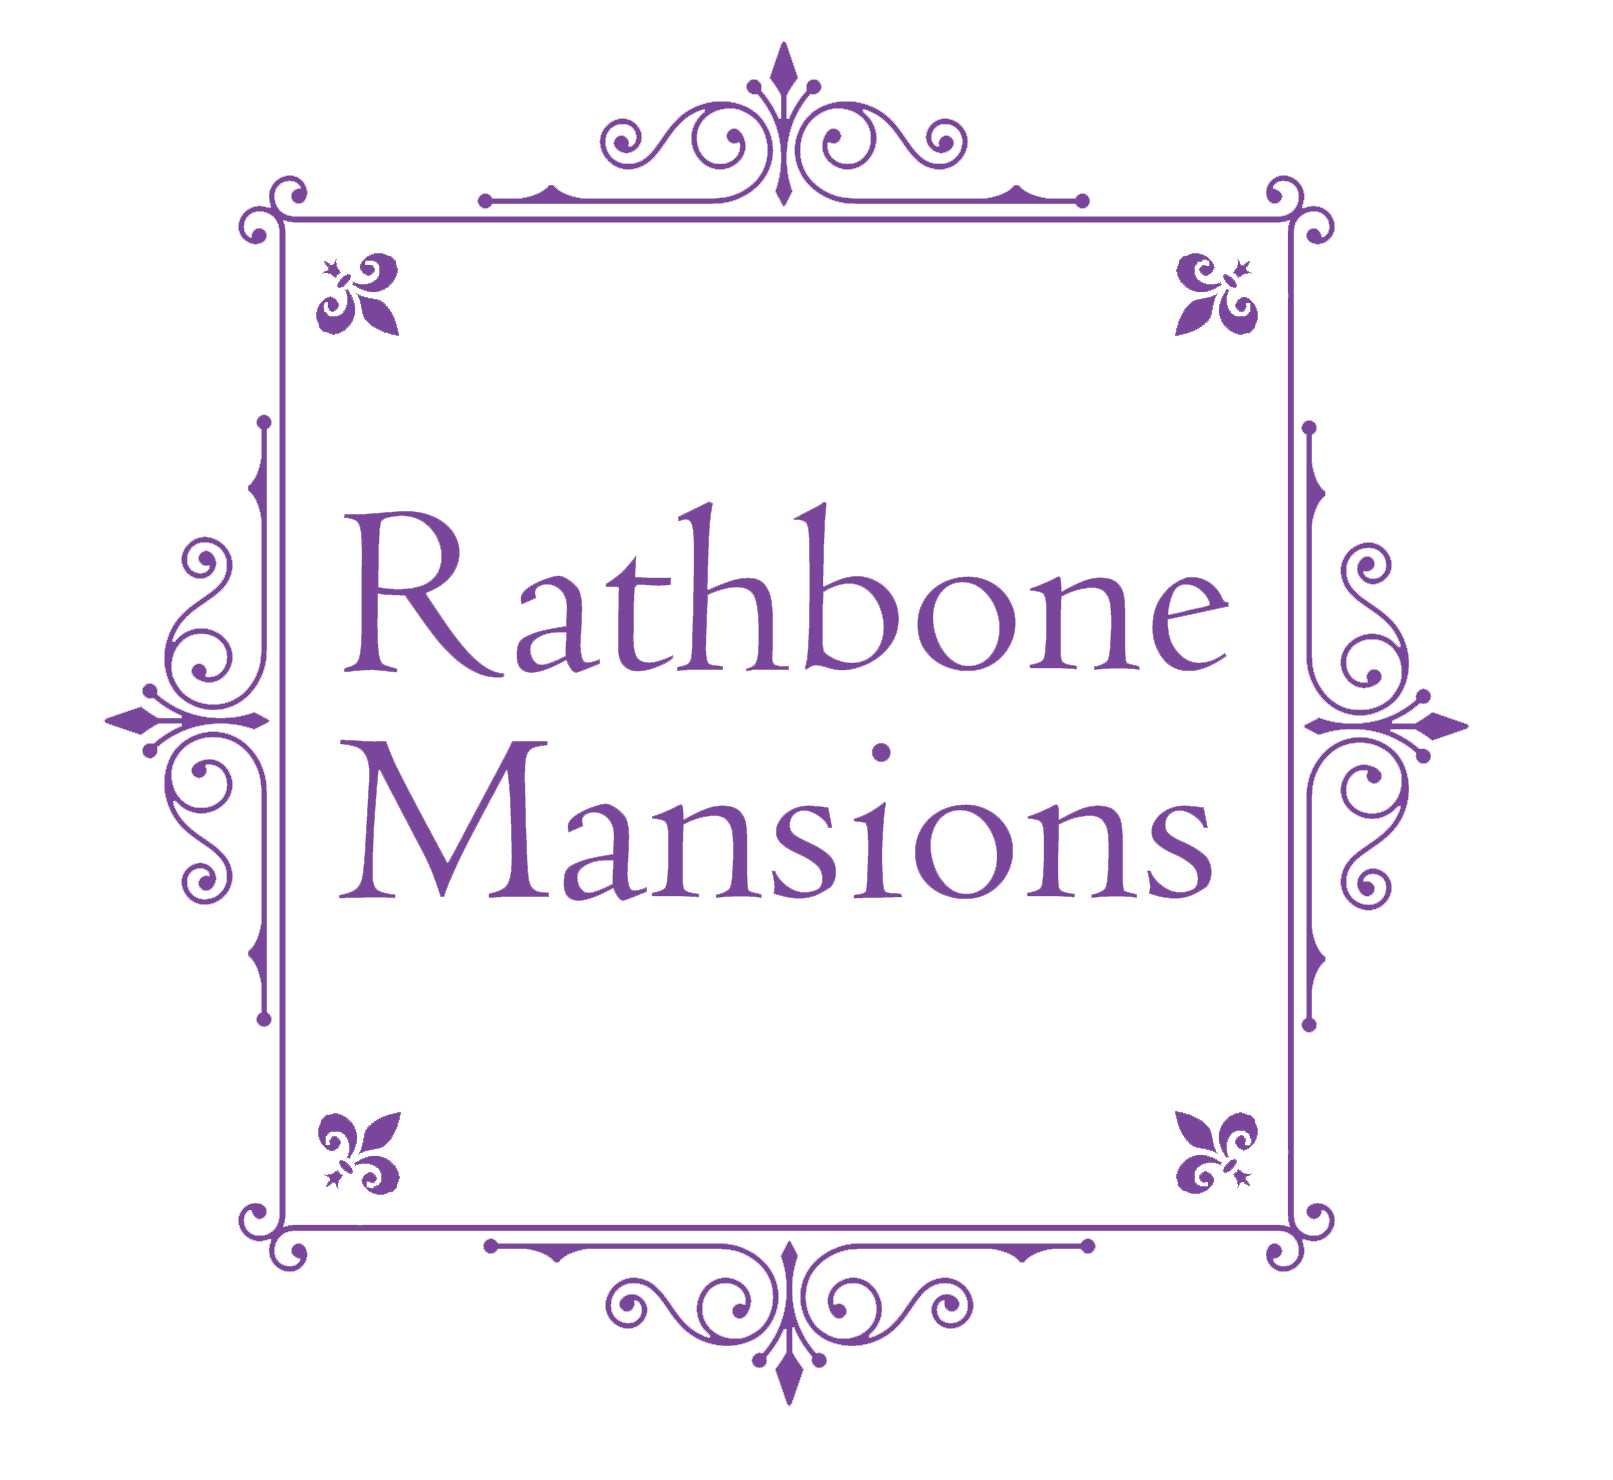 Rathbone Mansions